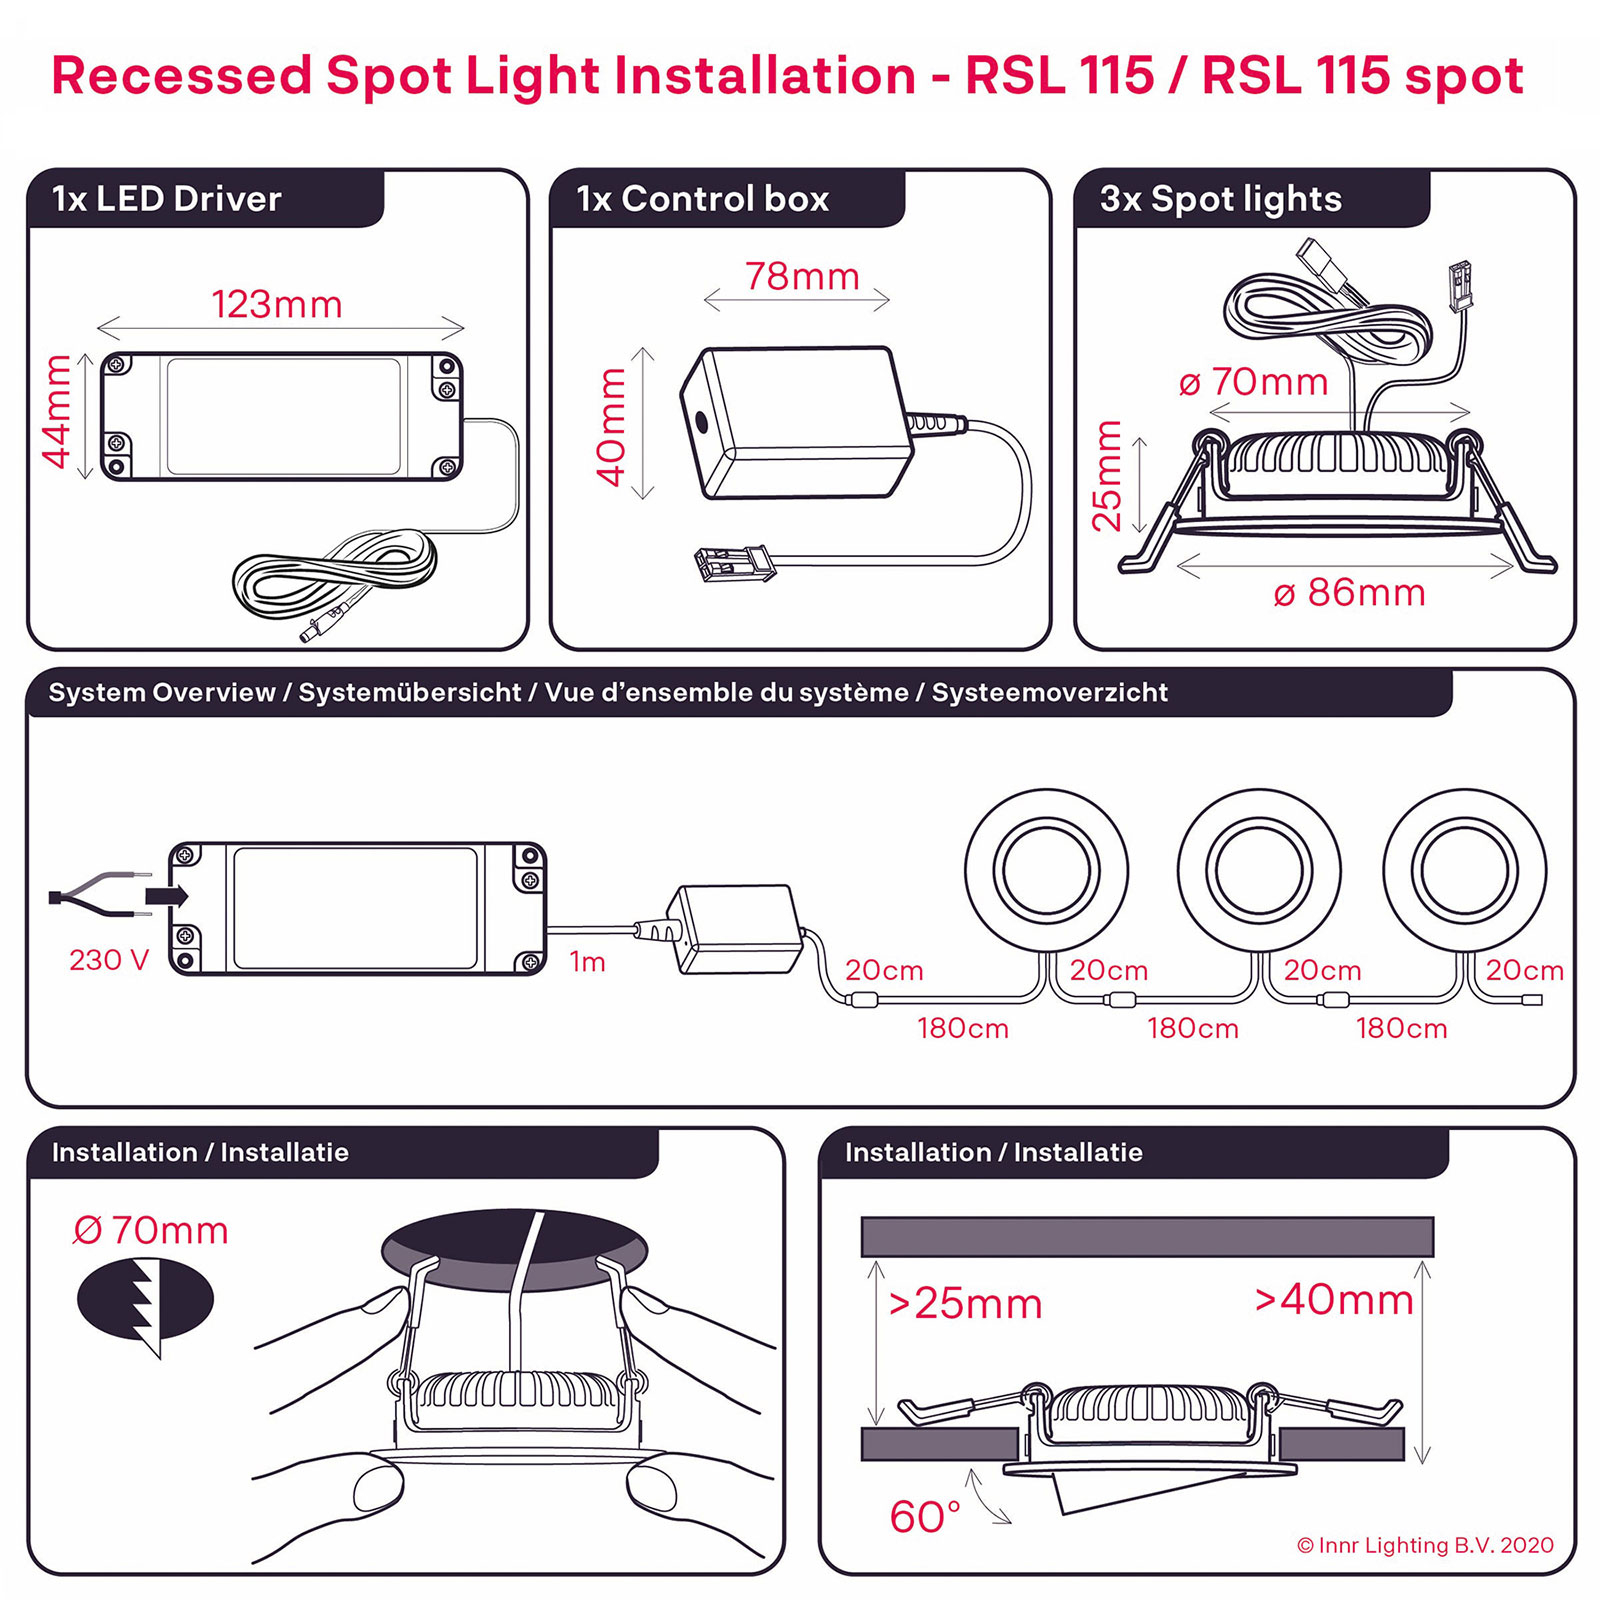 Innr LED inbouwspot RSL 115, 3/set met aansluiting